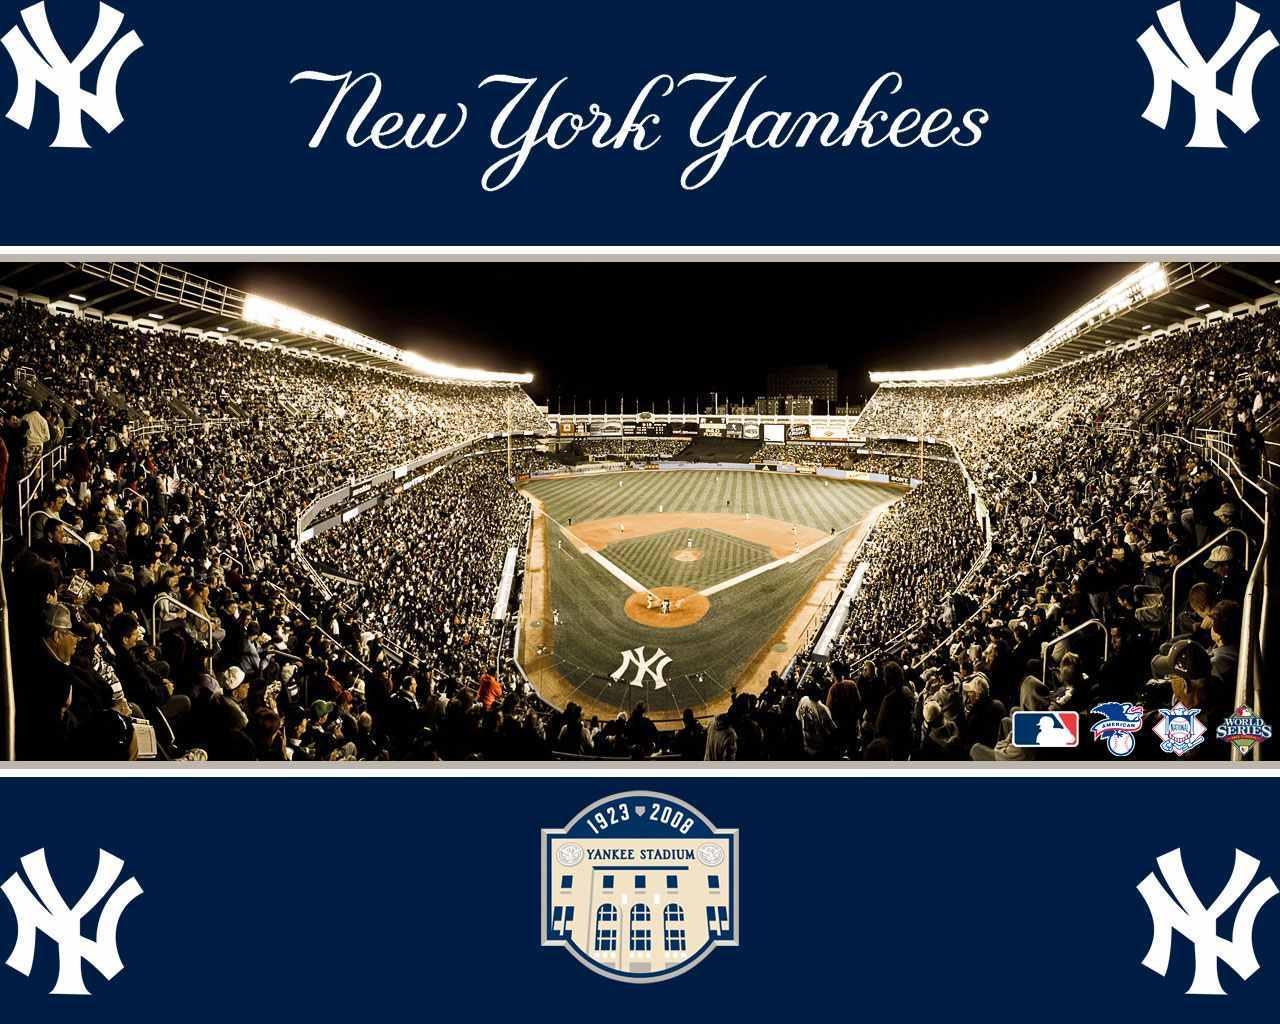 New York Yankees Image Wallpaper Photos